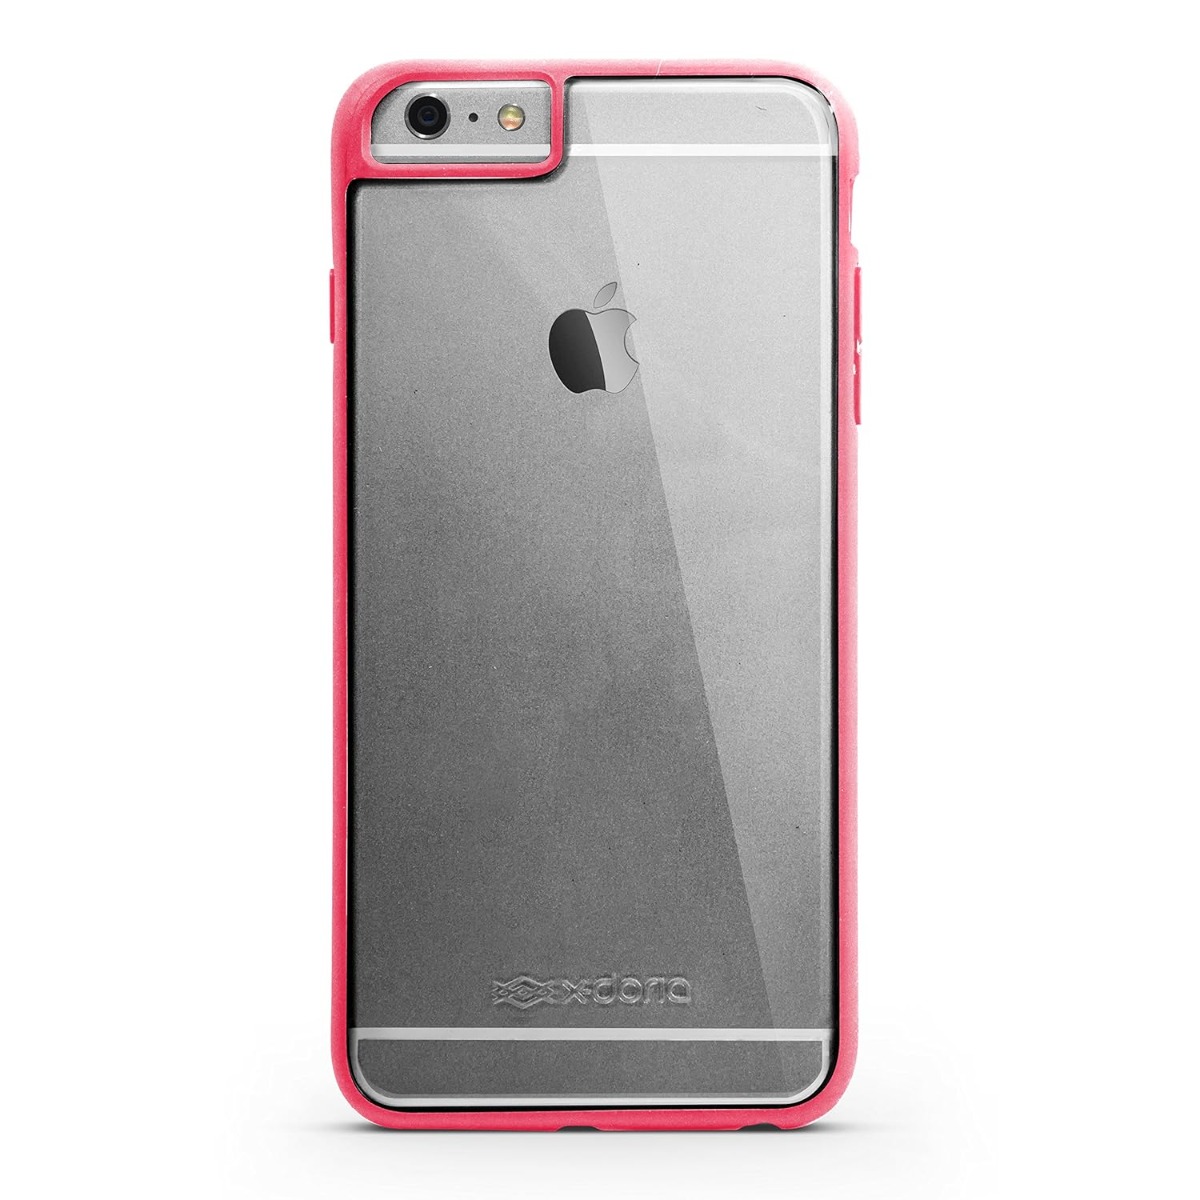  X-Doria Scene TPU/Polycarbonate Case For Apple iPhone 6 Plus [5.5"] - Pink